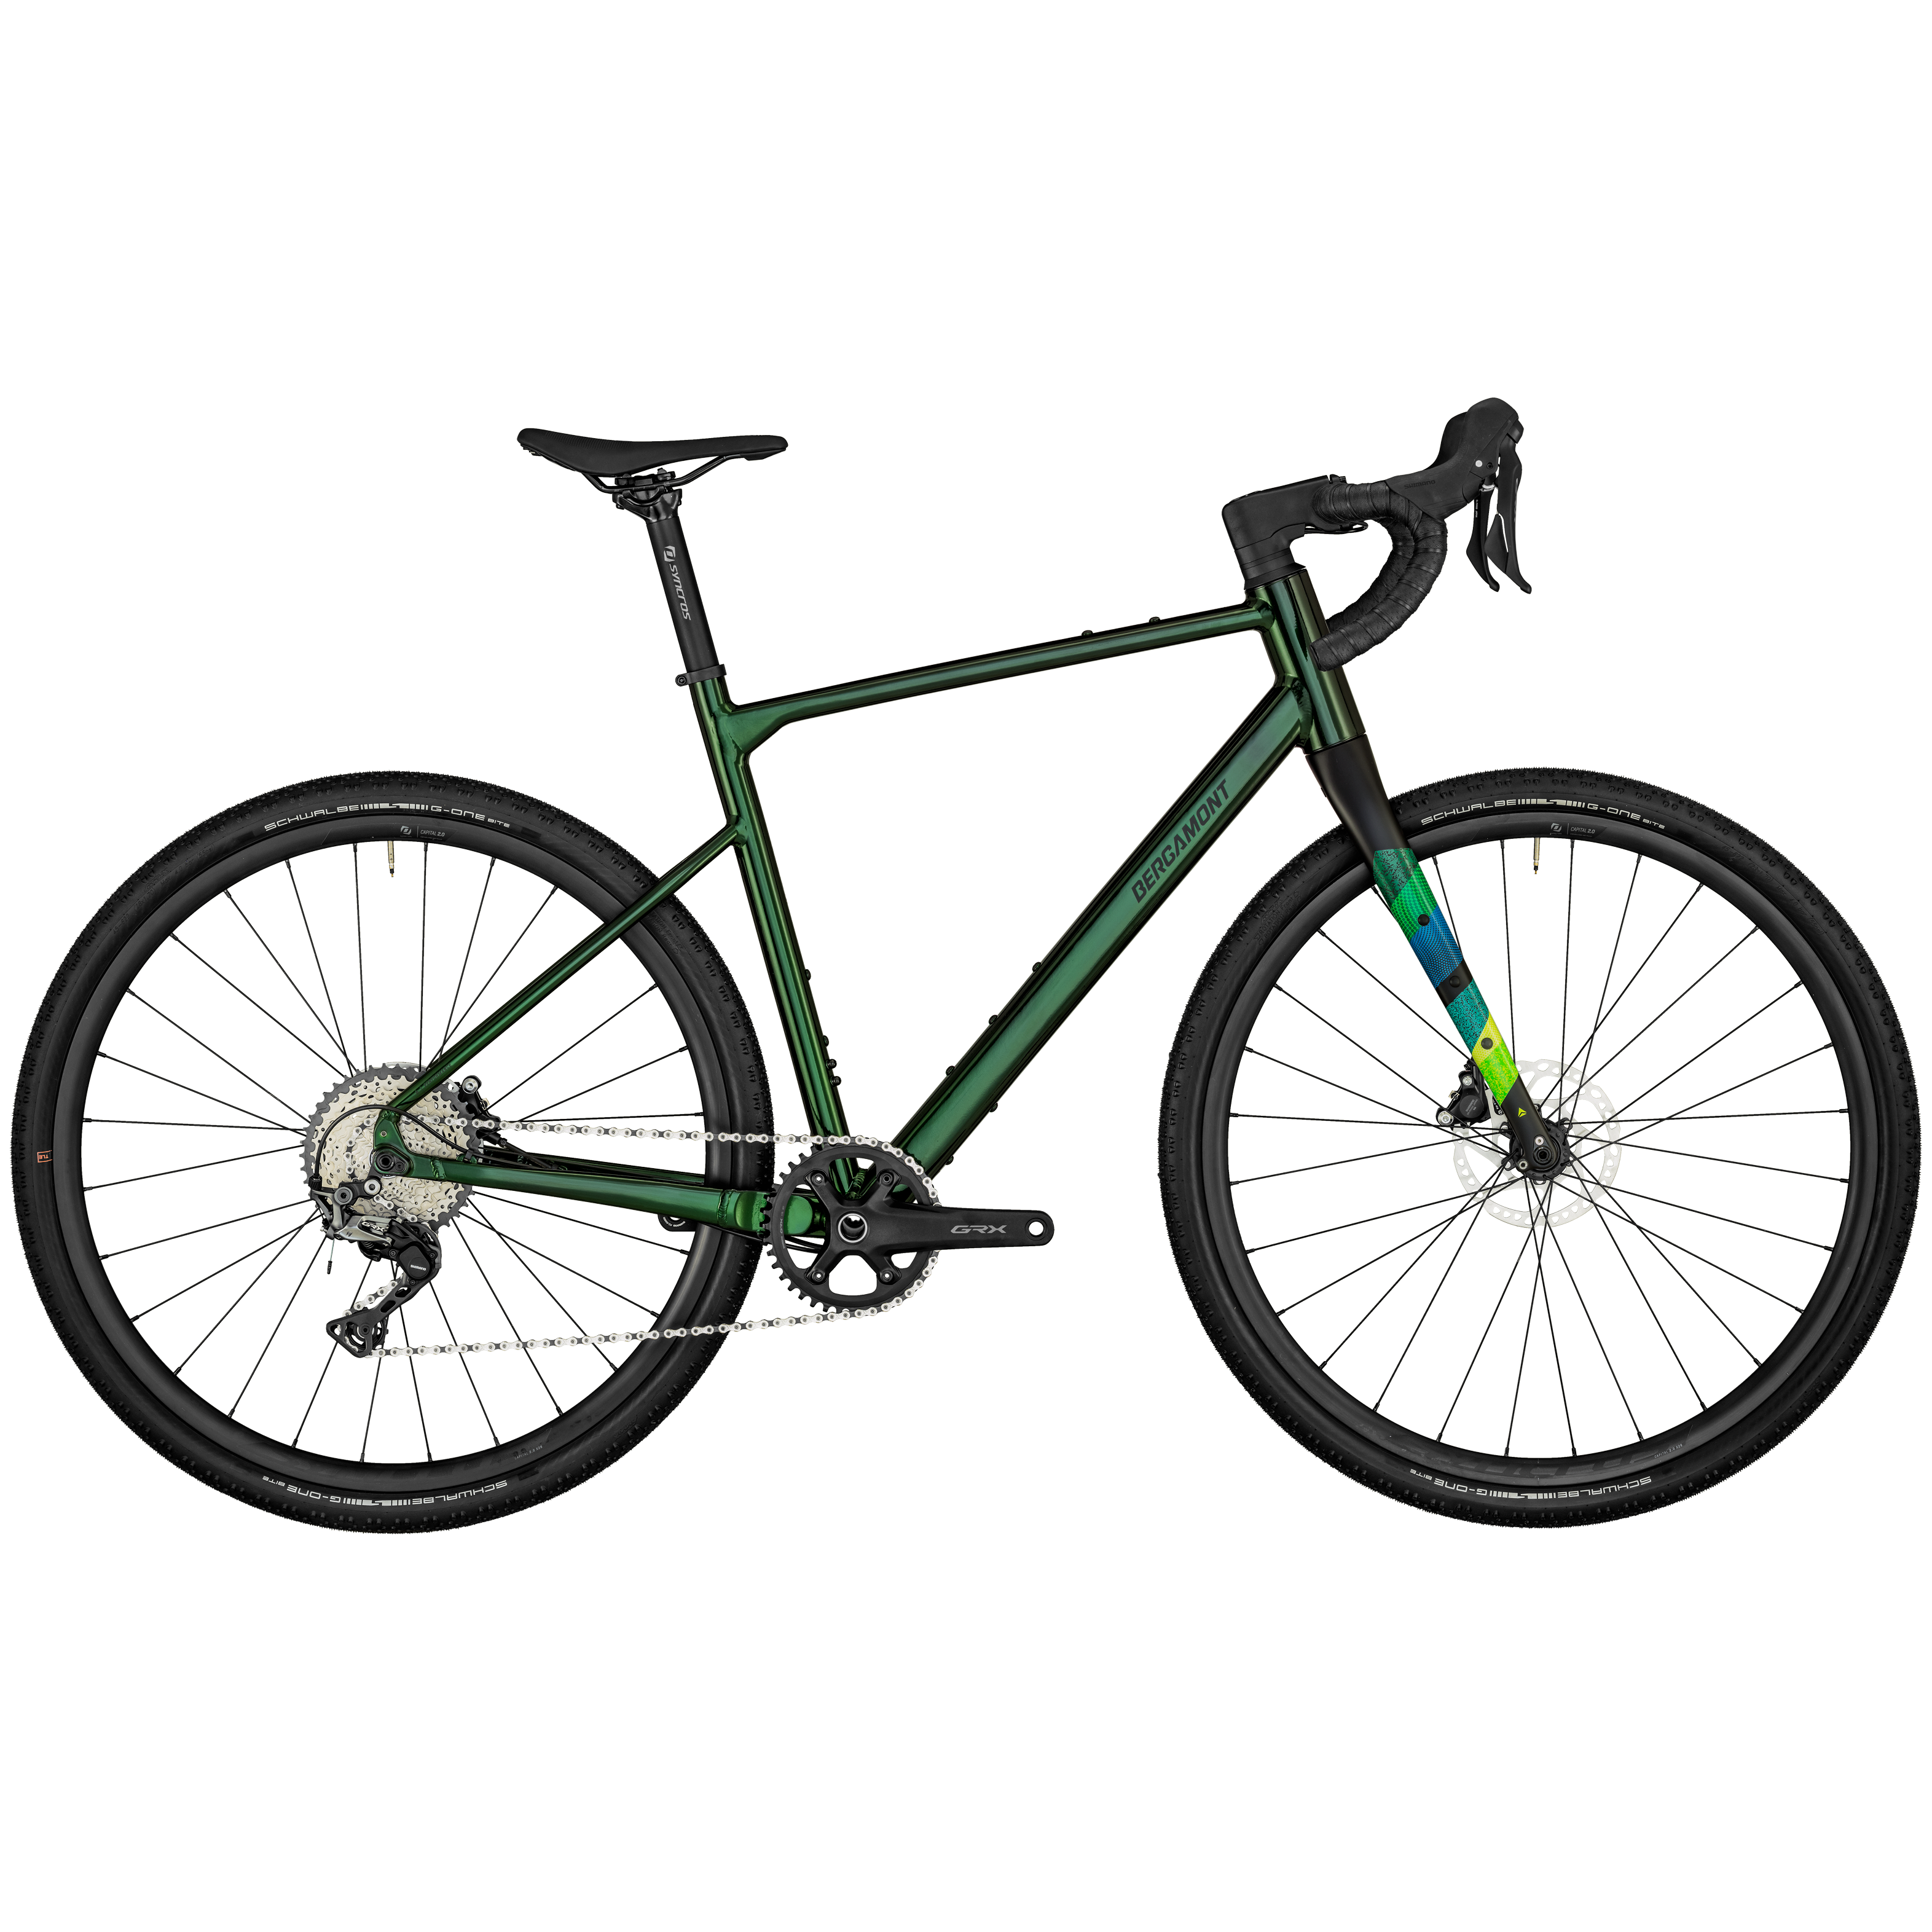 Bergamont Grandurance 8, 58 cm, shiny mirror green, GRX 812/600 1x11